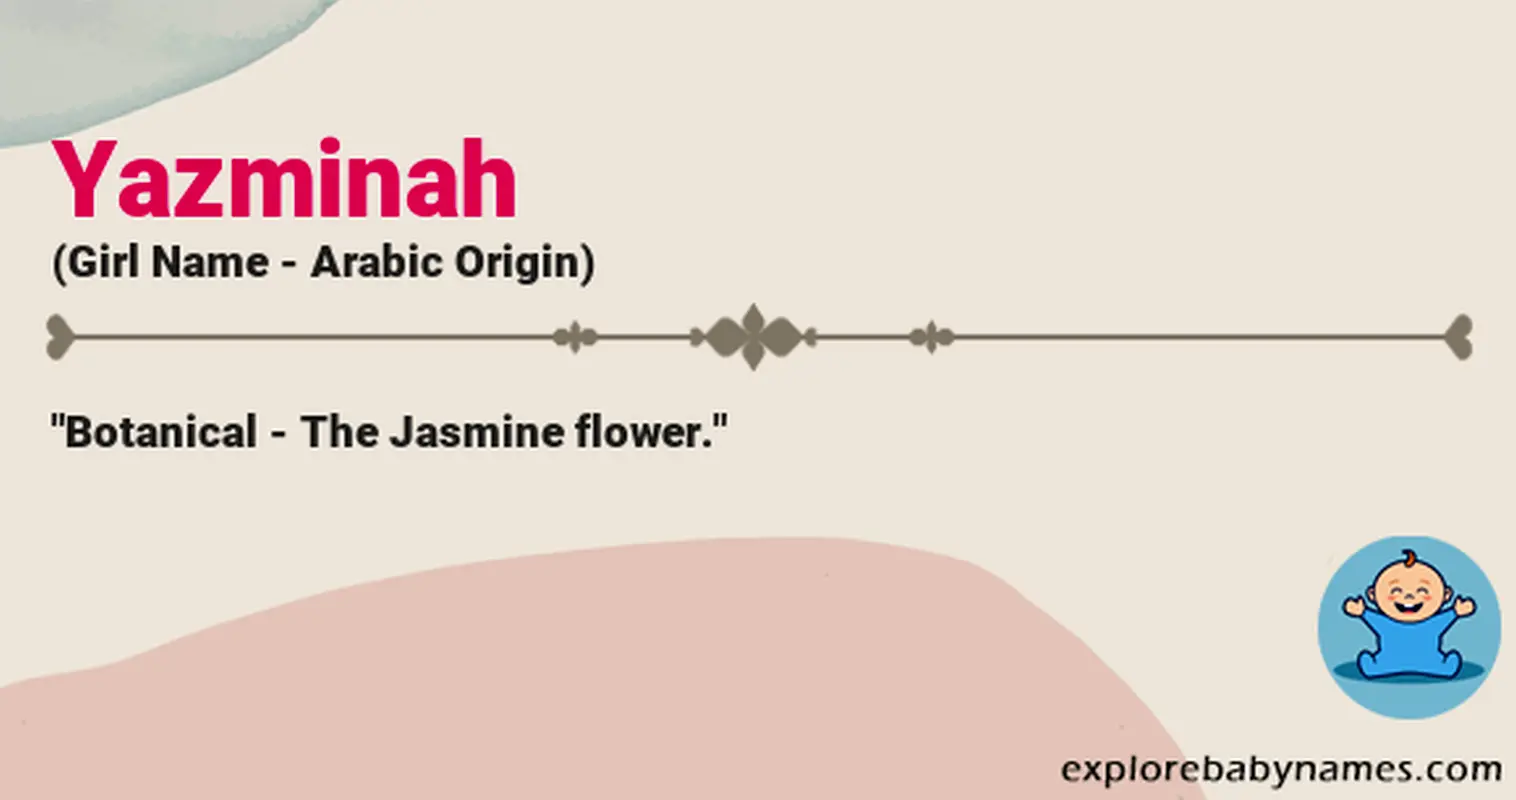 Meaning of Yazminah